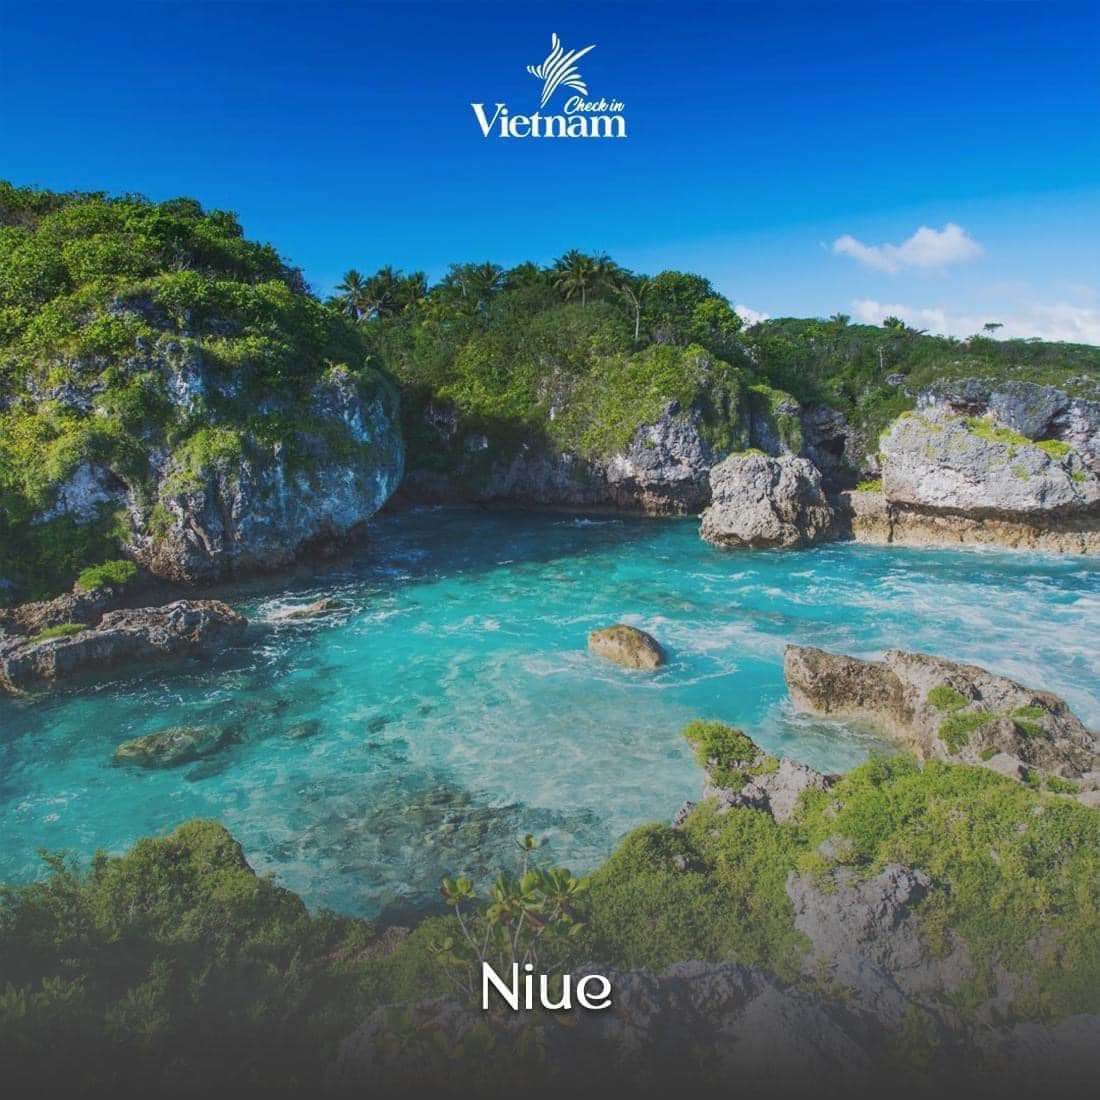 13. Niue